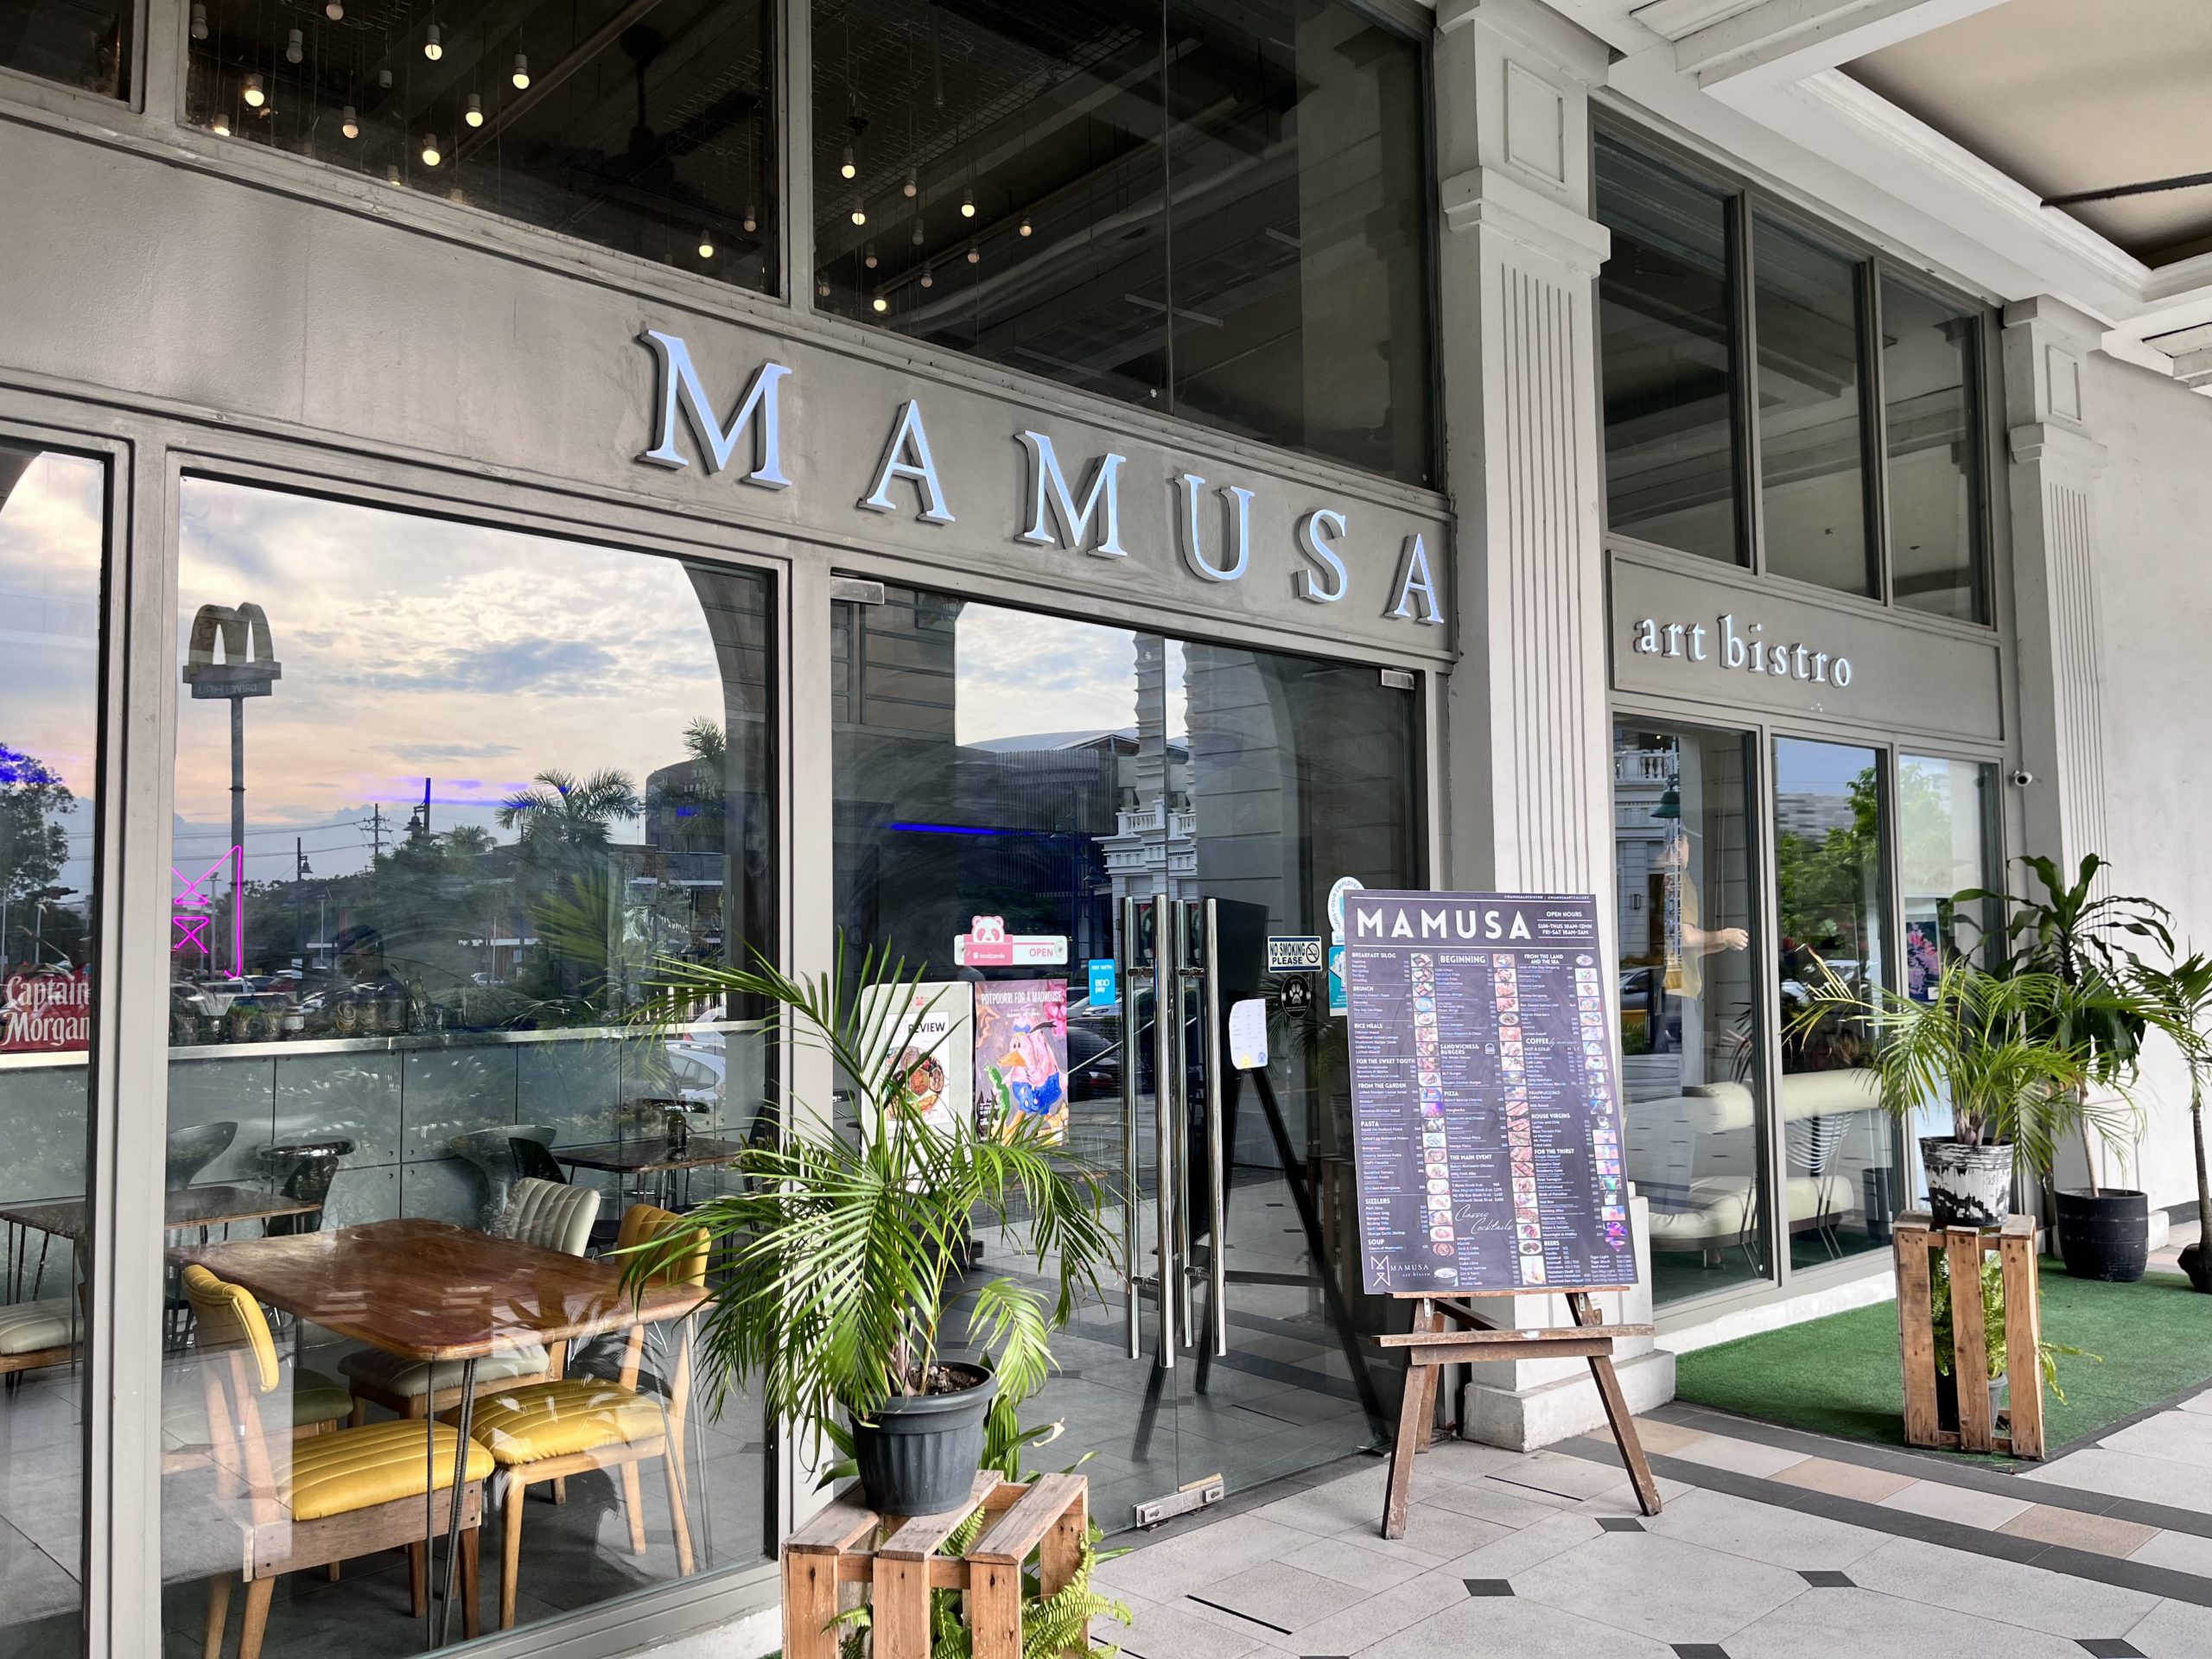 Mamusa Gallery exudes Iloilo’s contemporary art ambiance